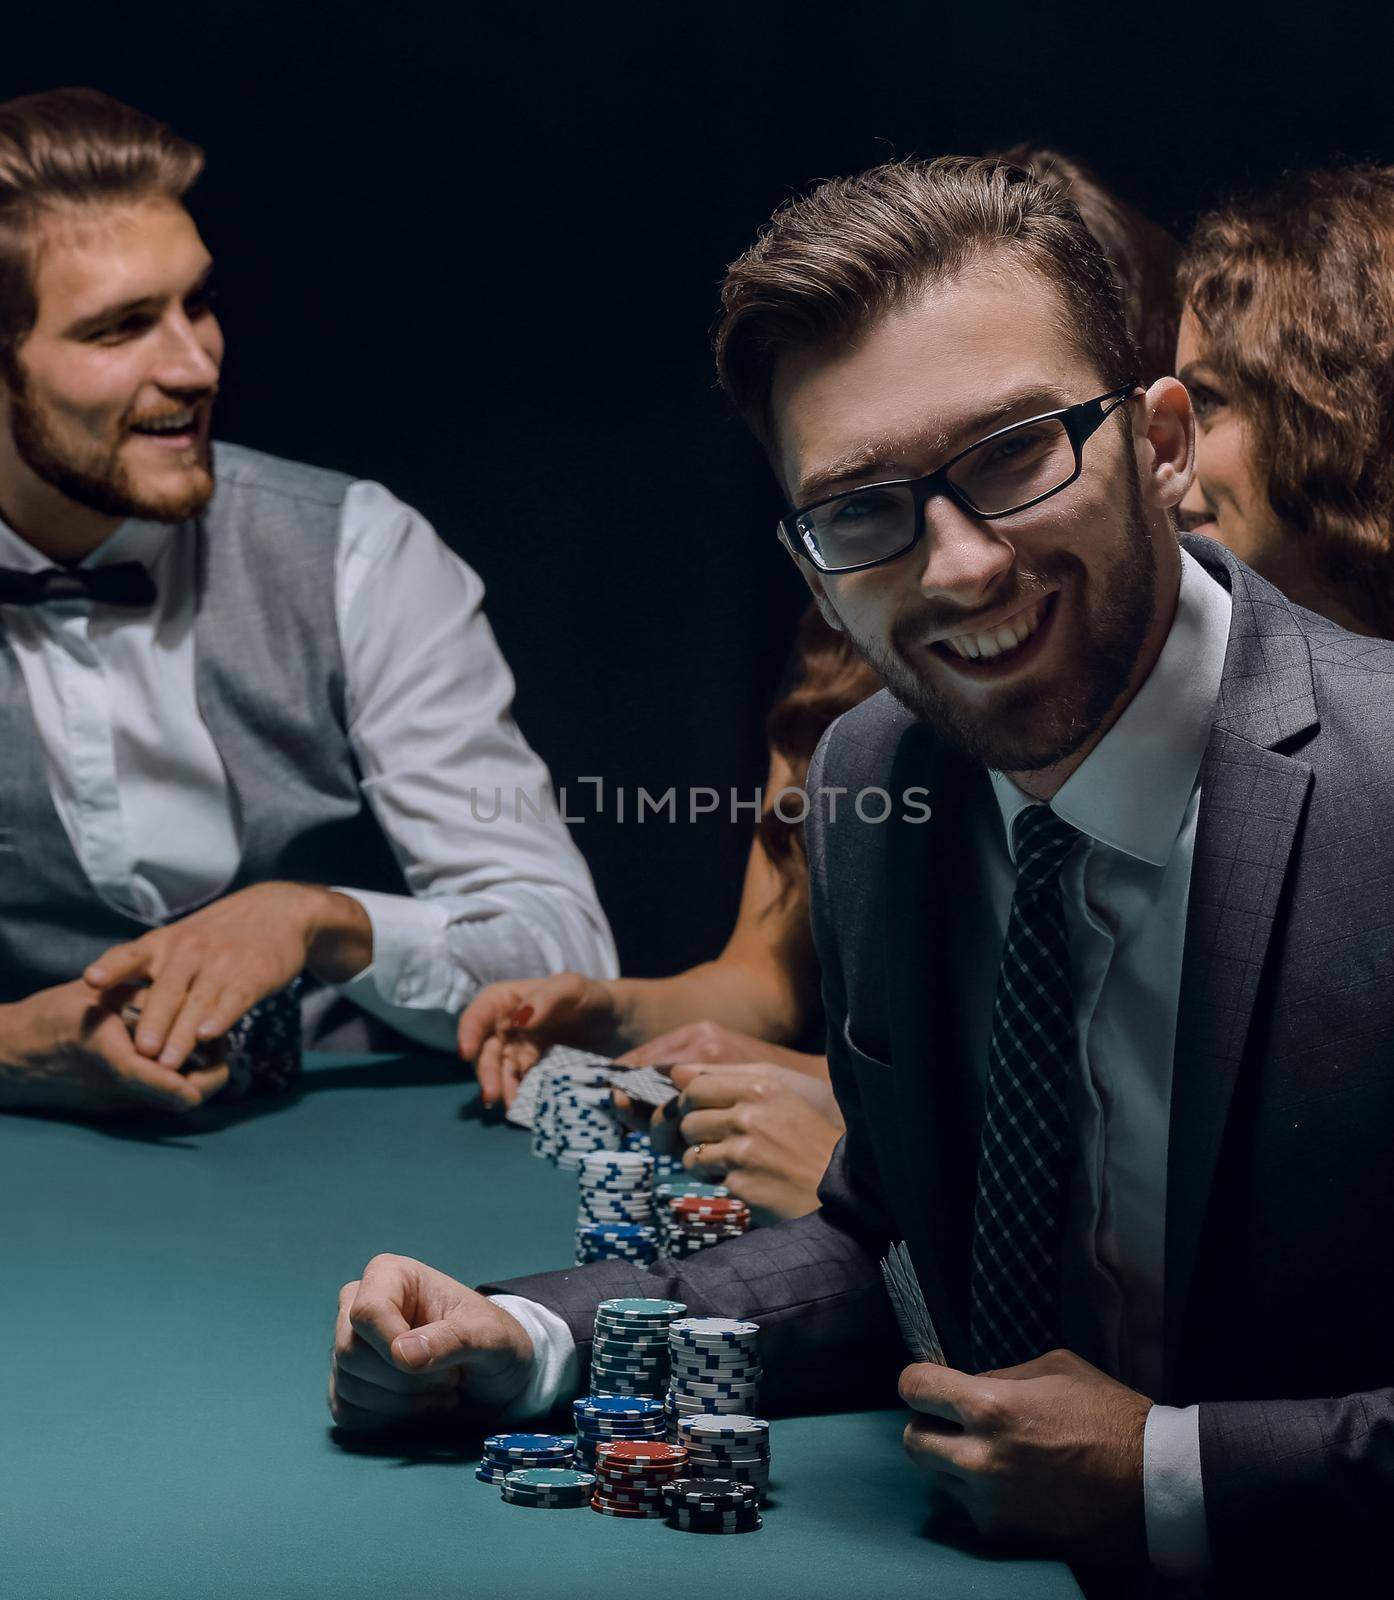 modern businessman playing poker in the night club